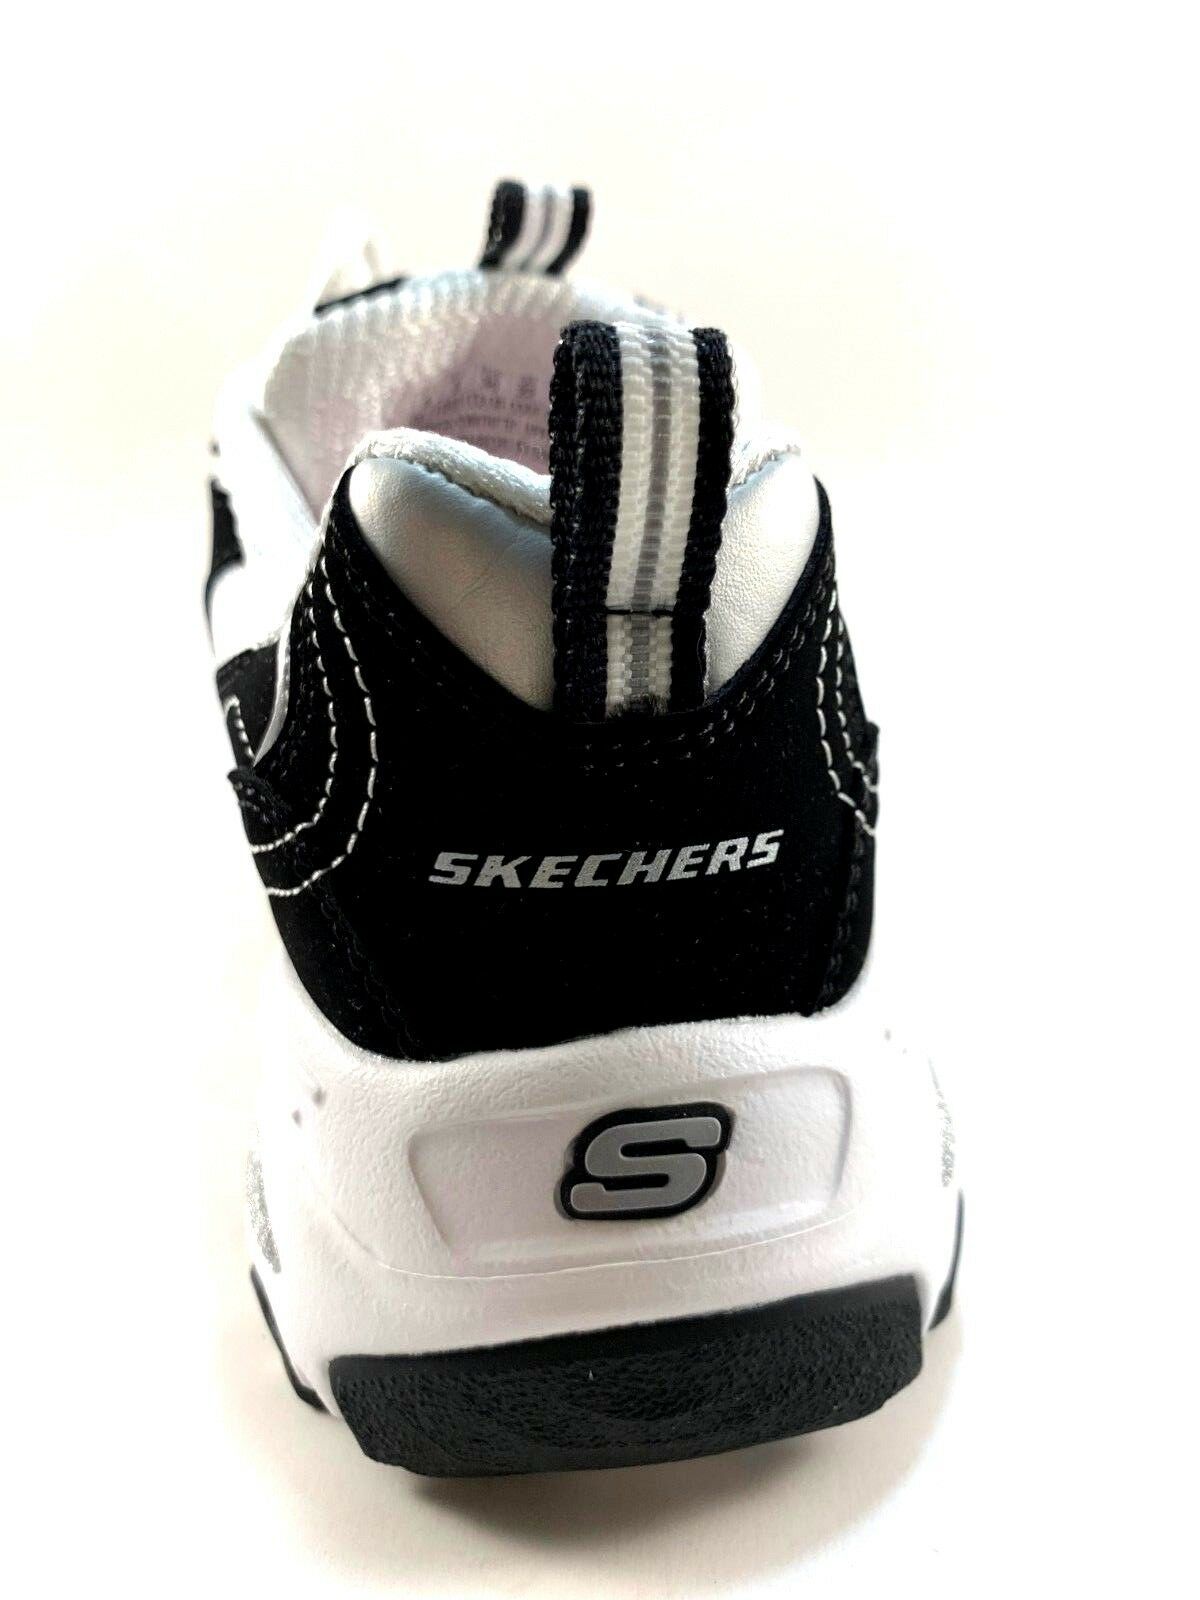 Skechers 11930 Black/White D'Lites Air and similar items